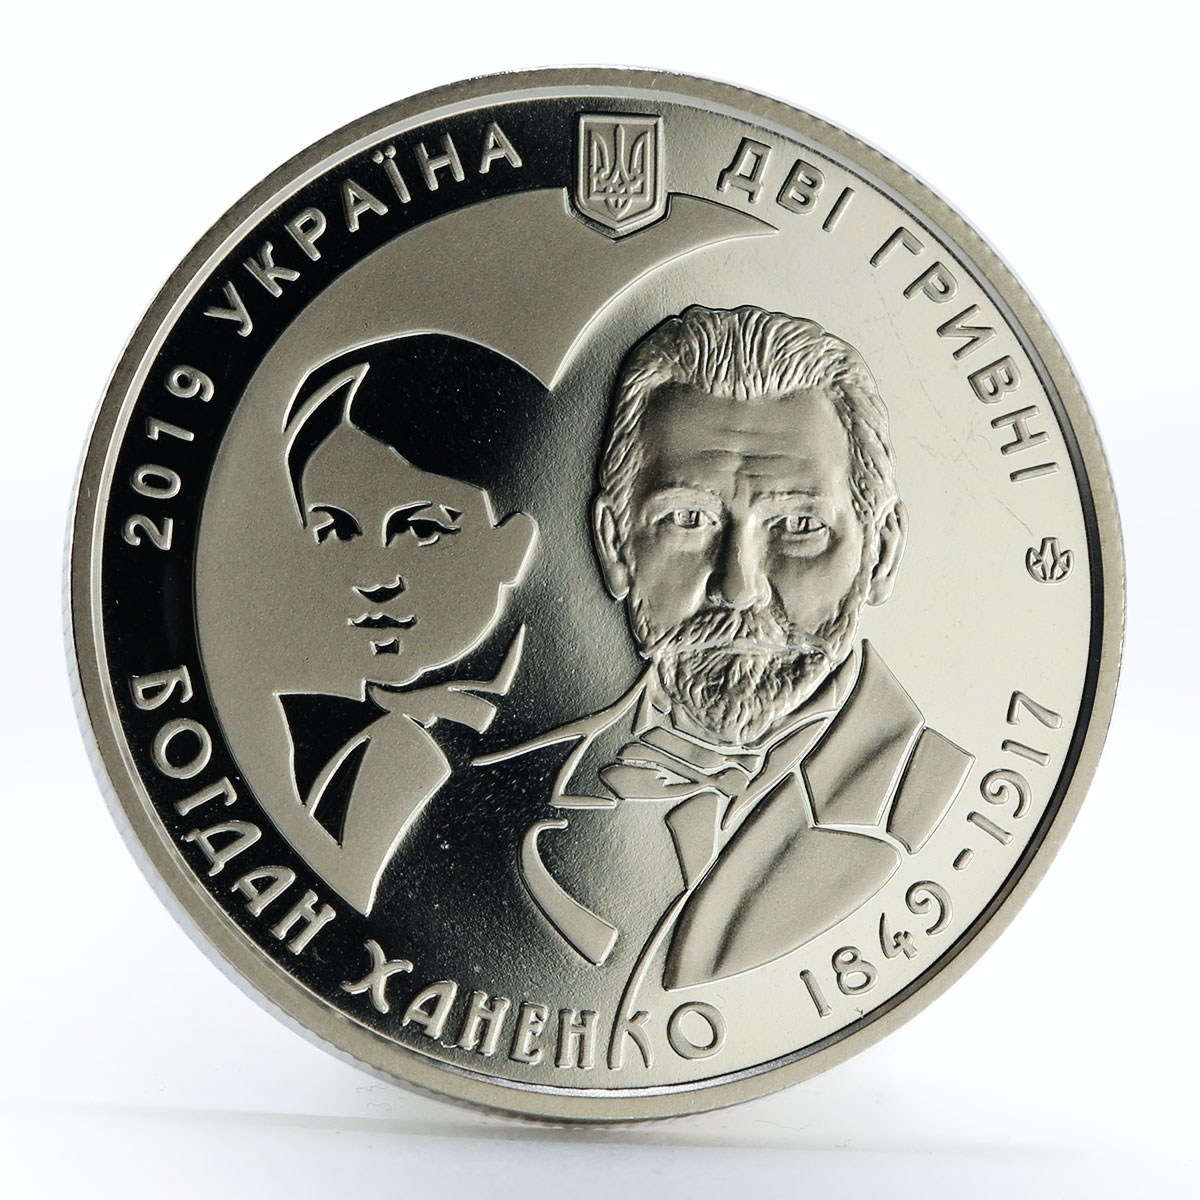 Ukraine 2 hryvni Bogdan Khanenko industrialist collector nickel coin 2019